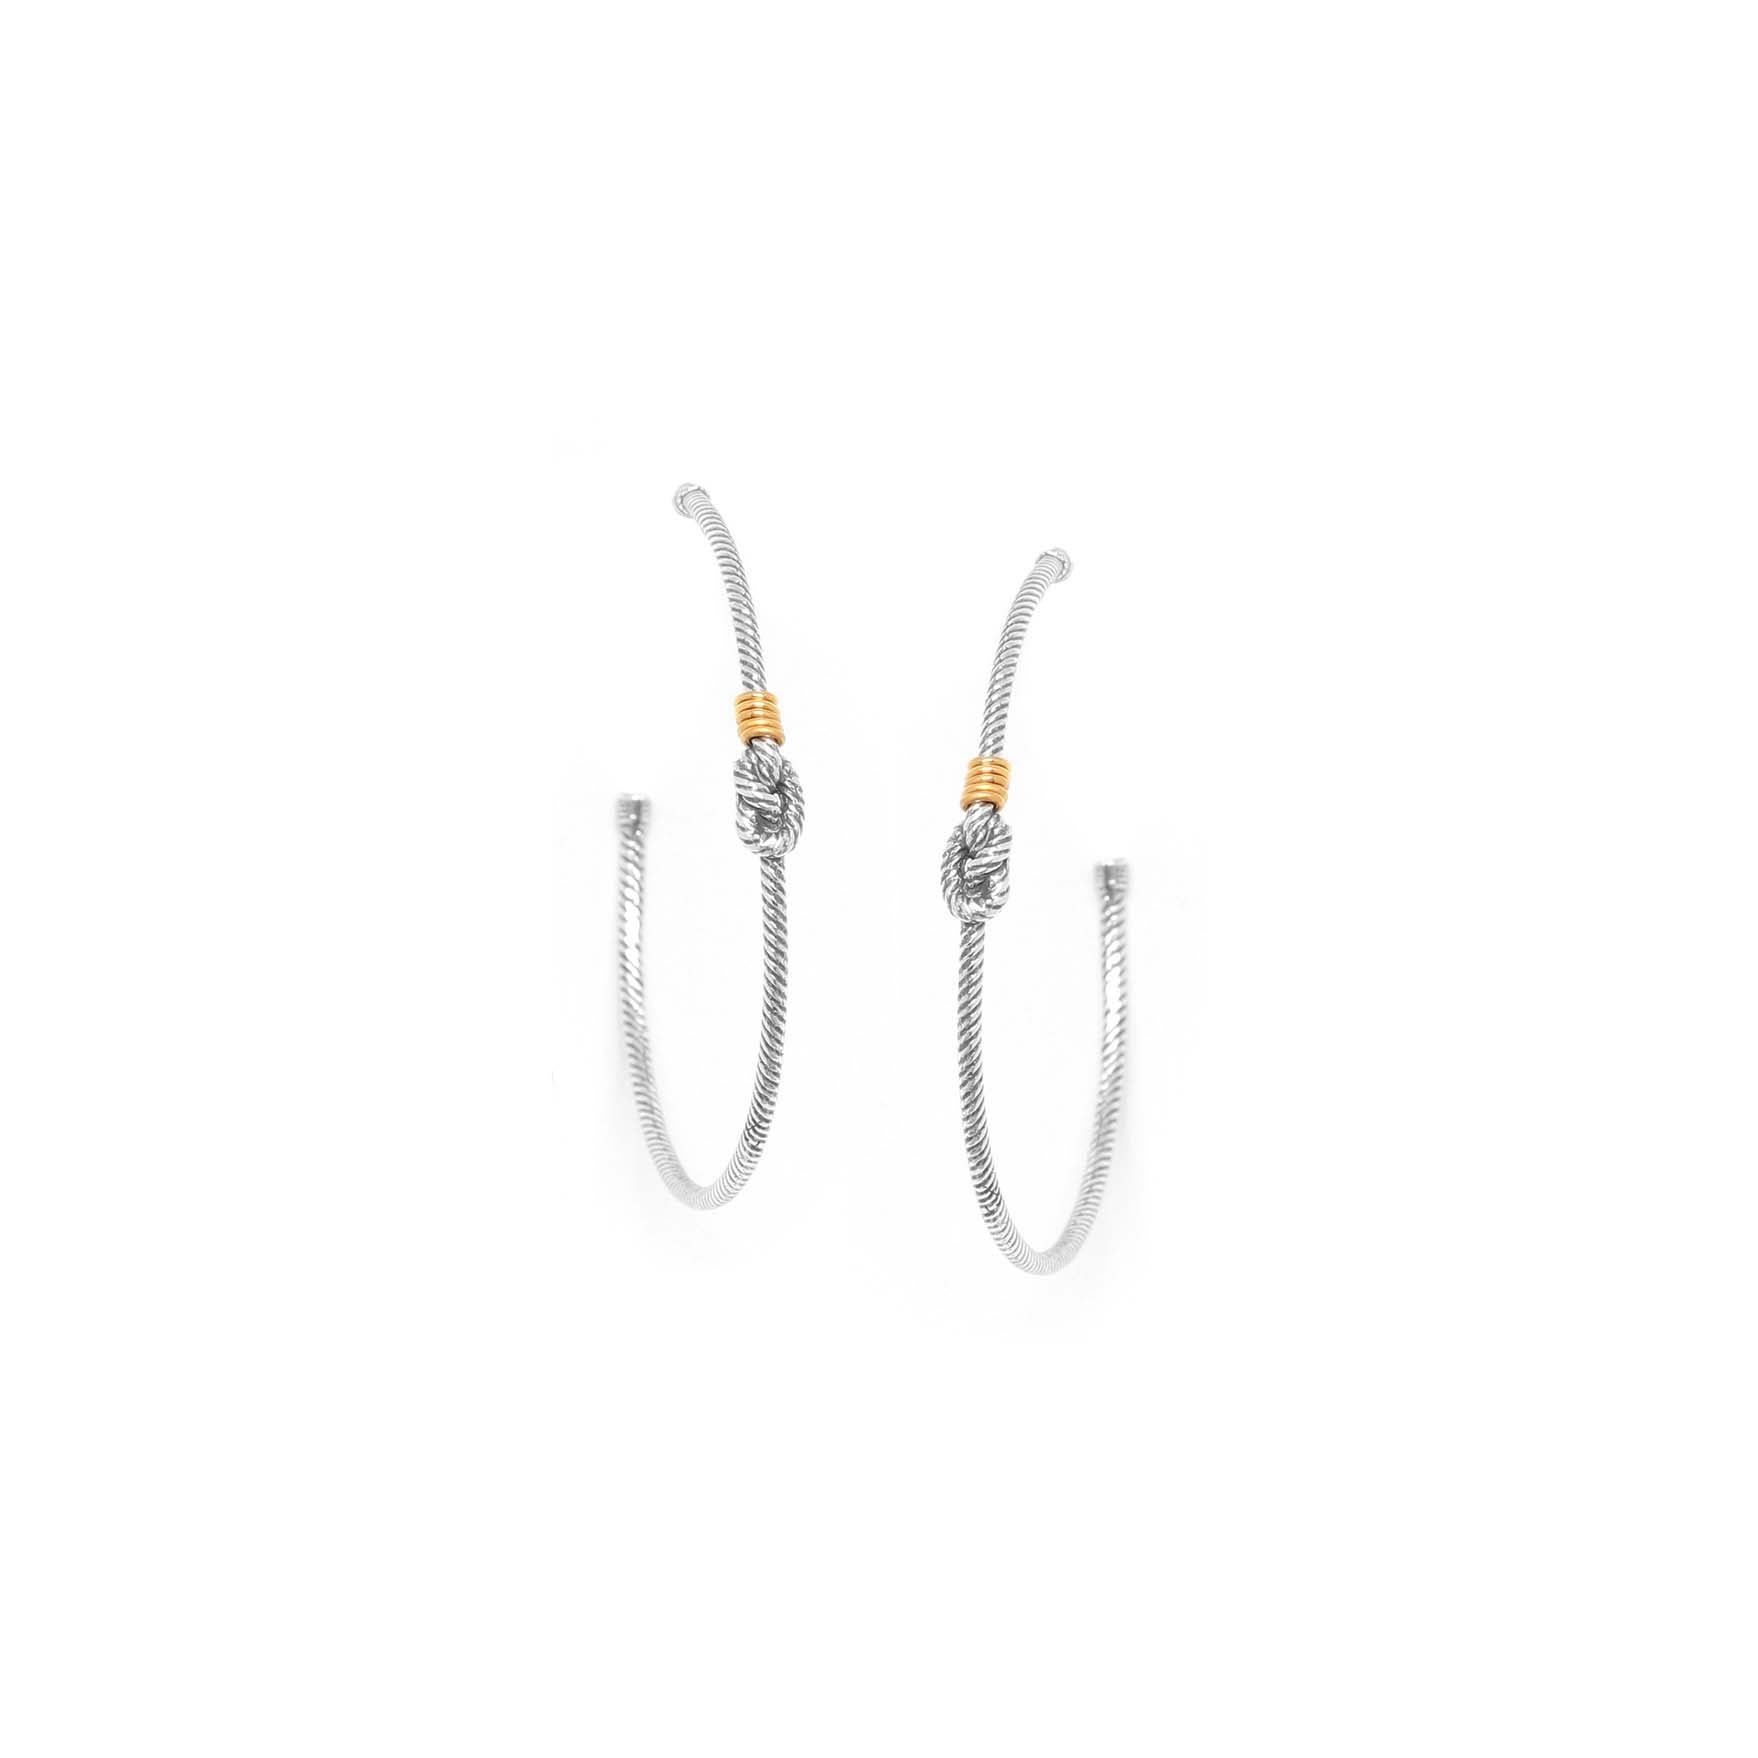 Ori Tao Large Hoop Earrings - La Marina Collection, French Jewelry - 0